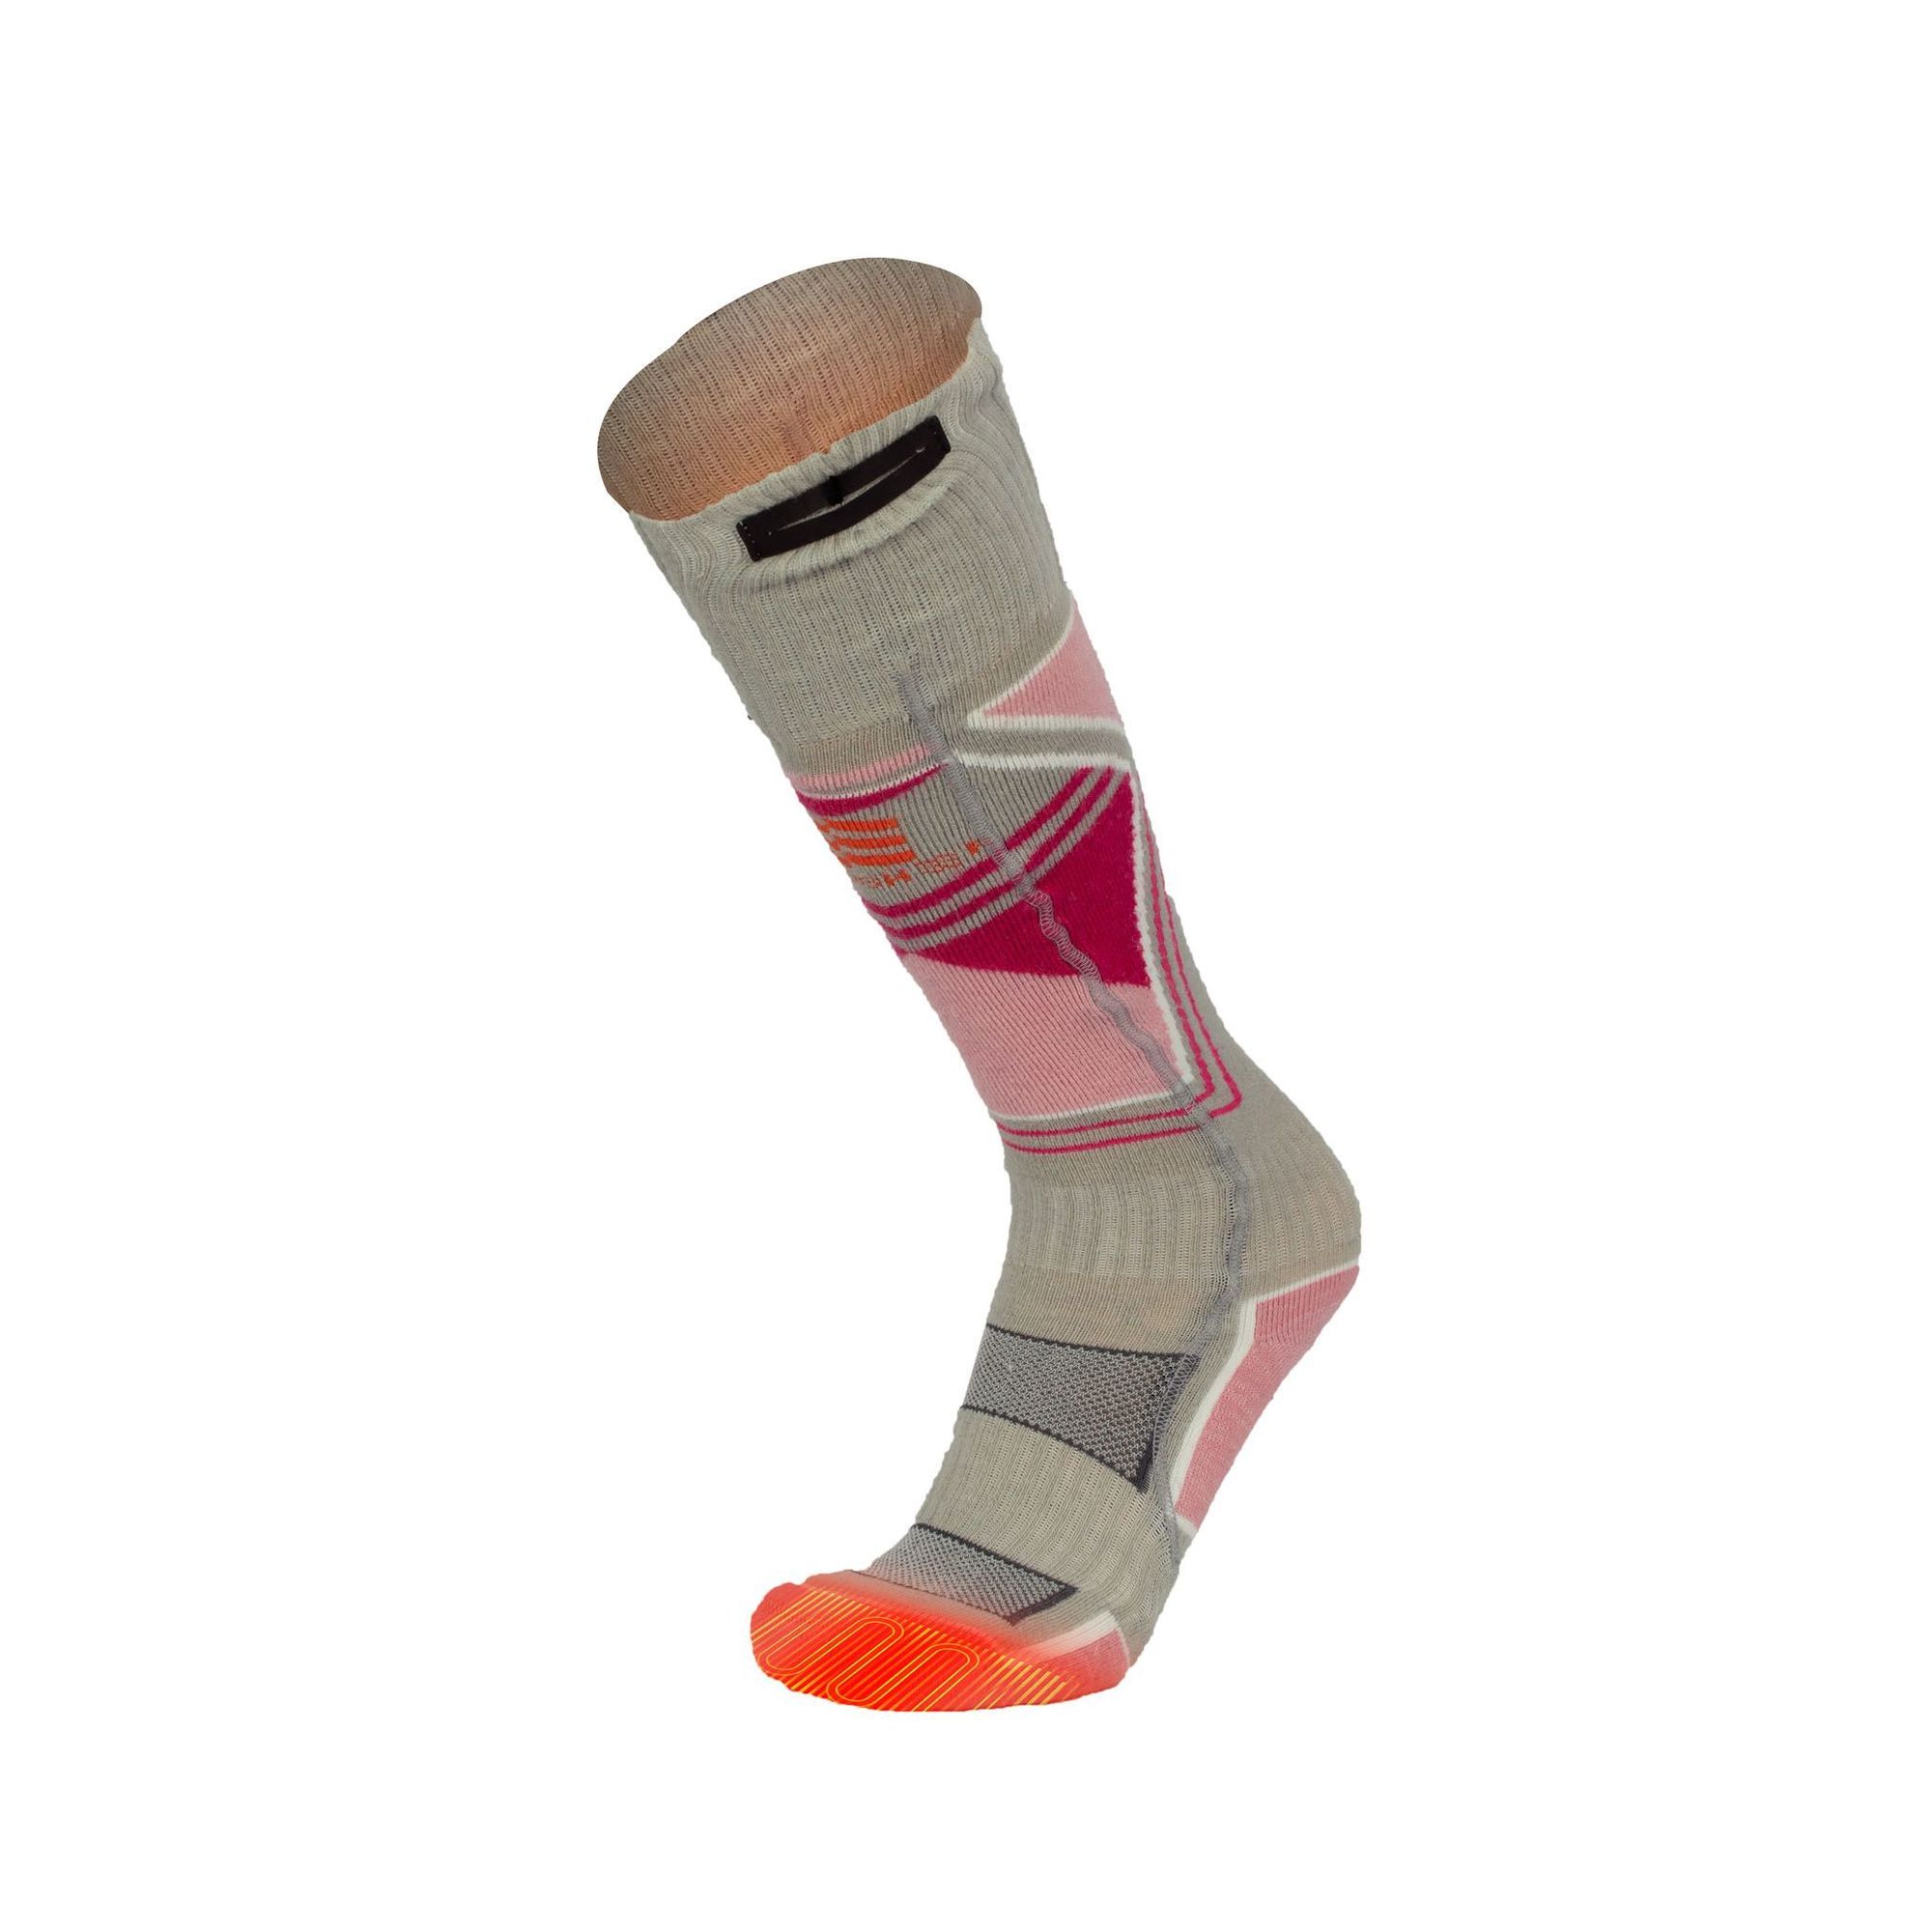 Fieldsheer, Premium Merino Heated Socks | Women's | PNK | SM, Size S, Pairs (qty.) 1 Color Pink, Model MWWS07010221